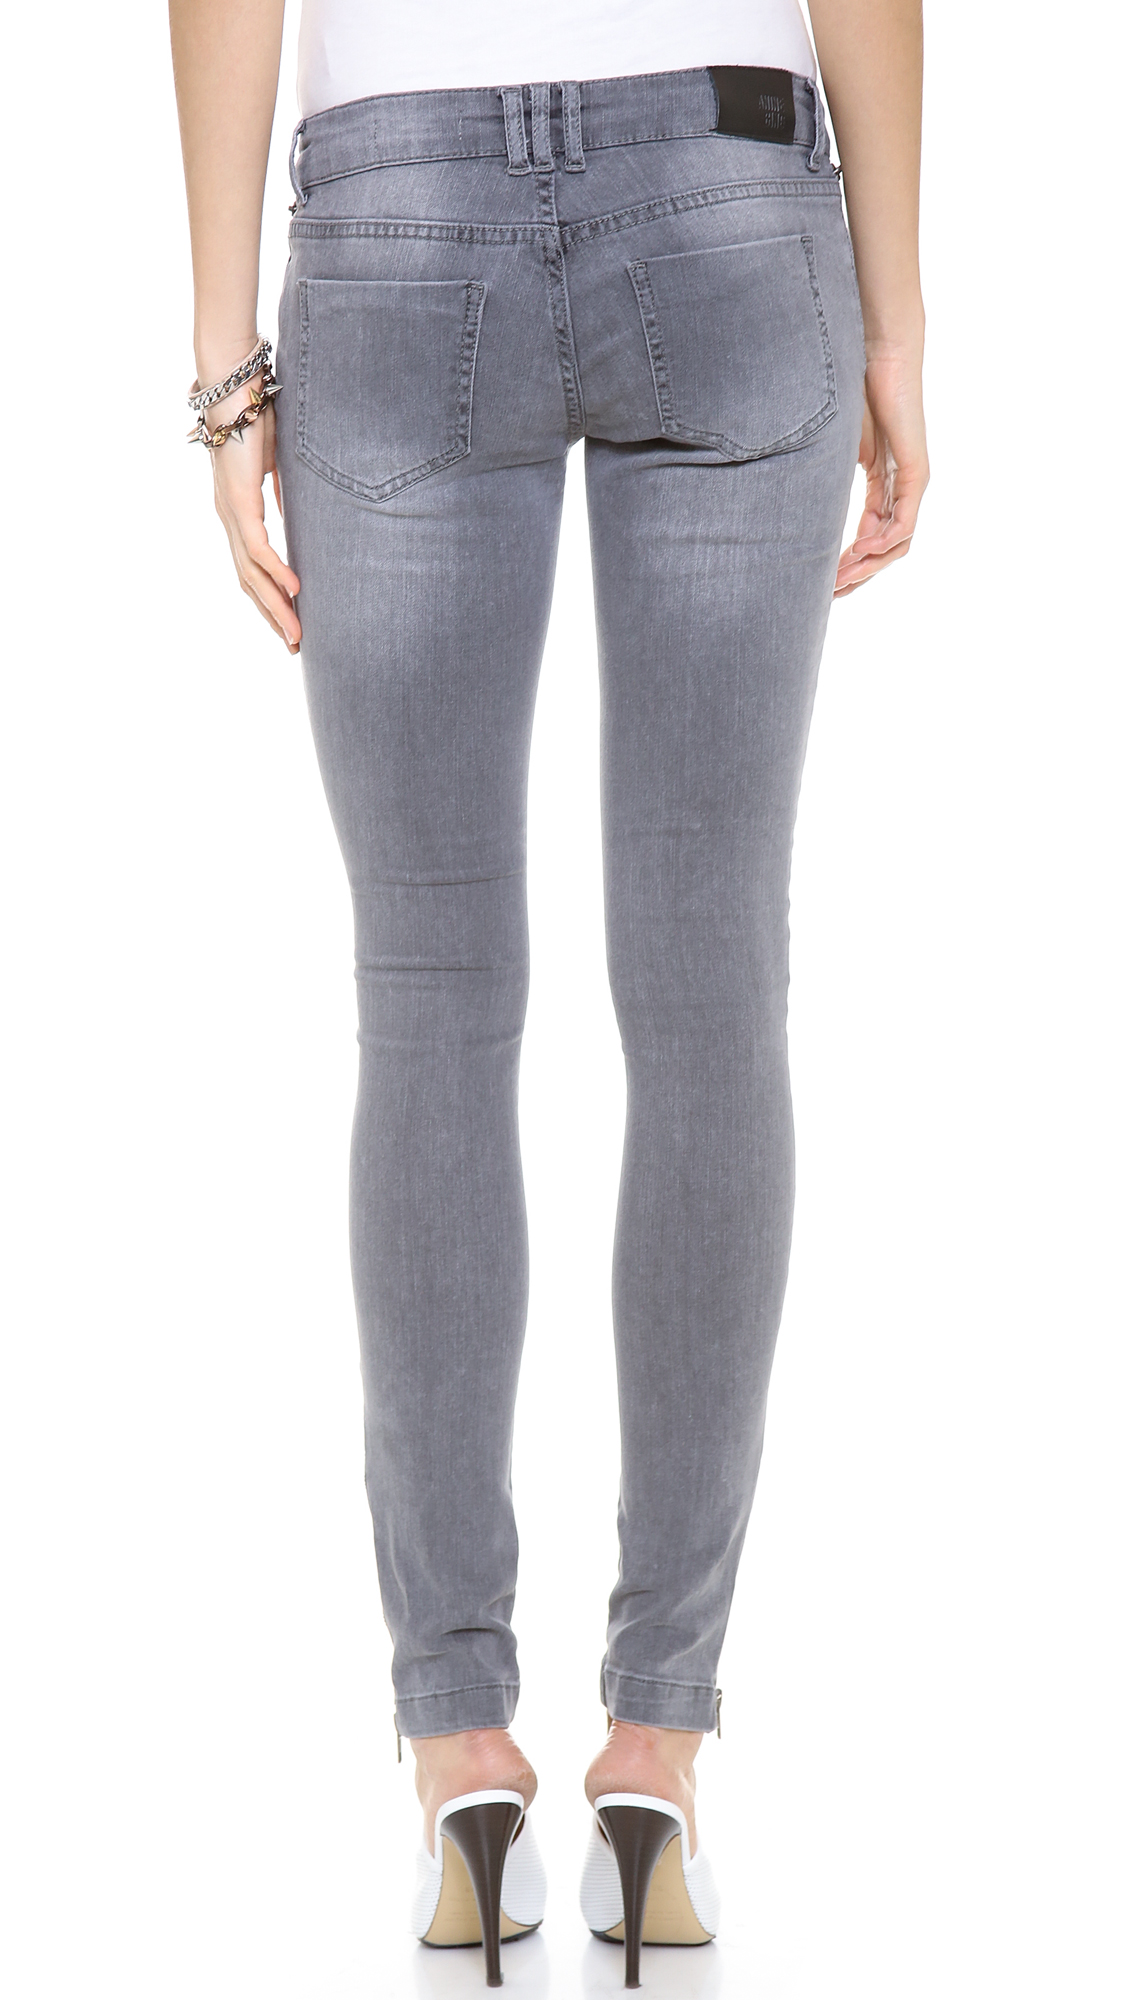 Anine Bing Double Zip Skinny Jeans - Black in Grey (Gray) - Lyst